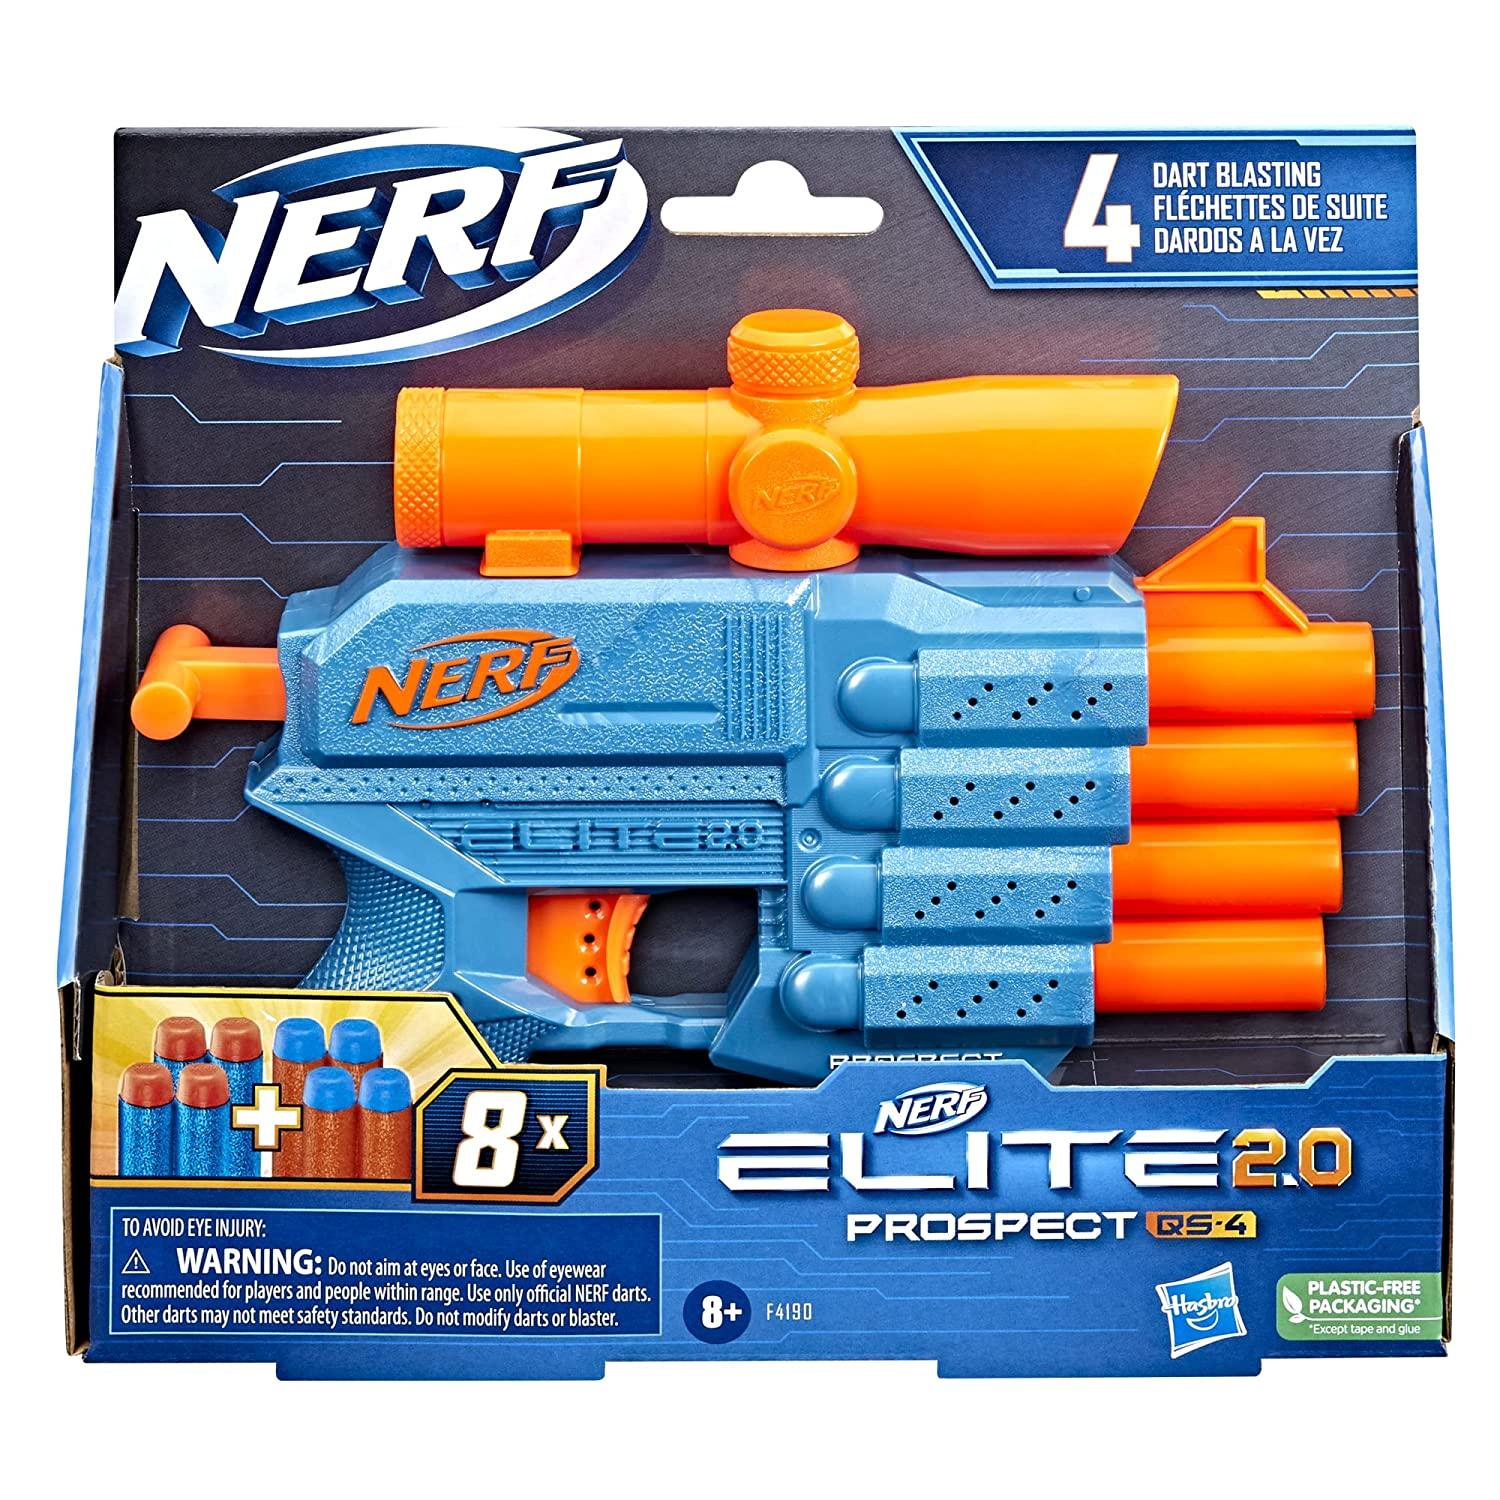 Nerf Elite 2.0 Prospect QS-4 Blaster, 8 Official Nerf Elite Darts, 4-Dart Blasting, Nonremovable Targeting Scope - FunCorp India